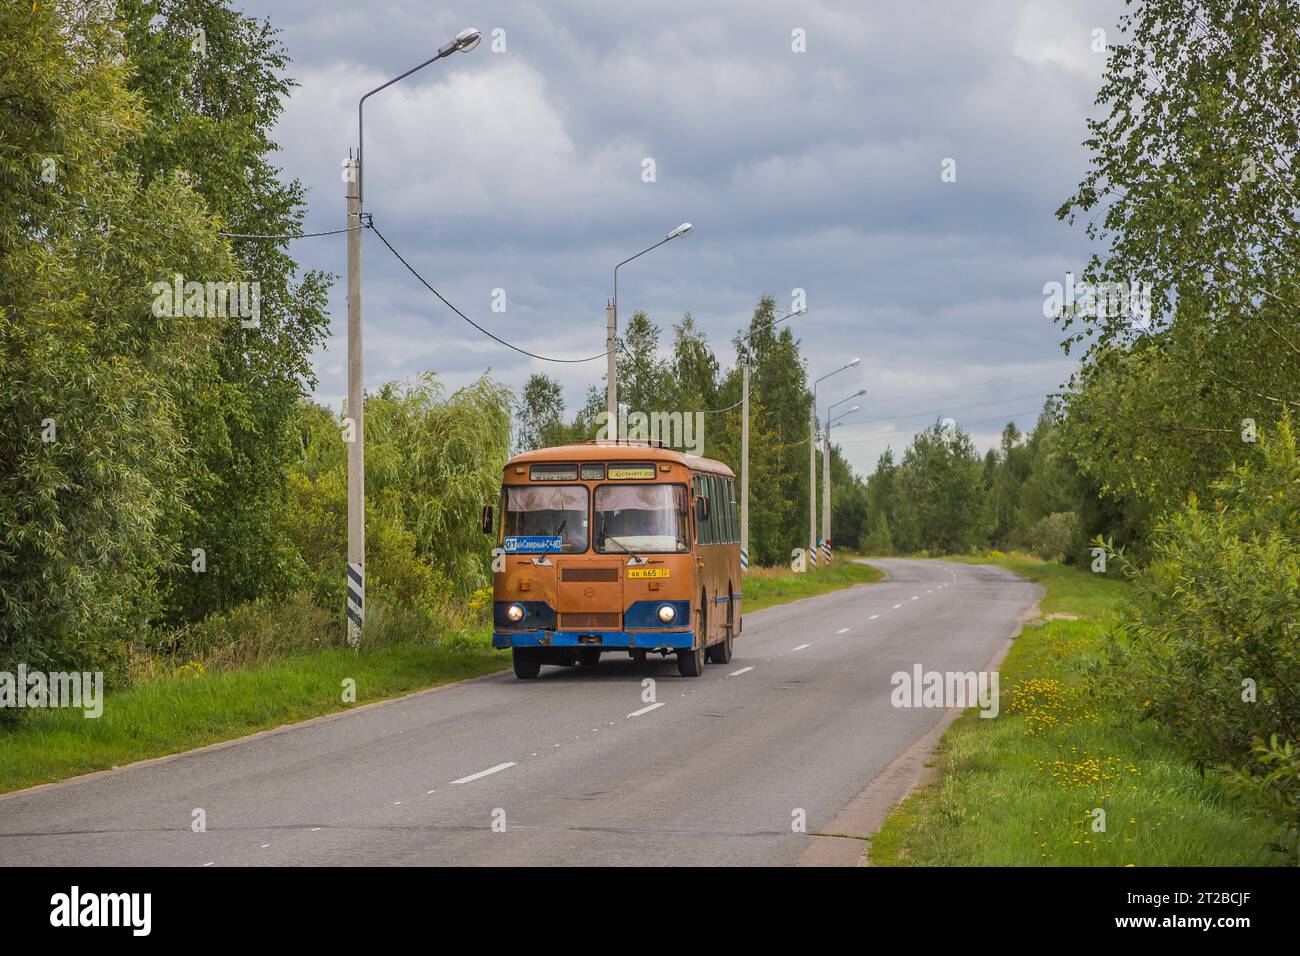 1.08.2019. Russia, Unecha. Liaz-677 Robun on urban route. Stock Photo